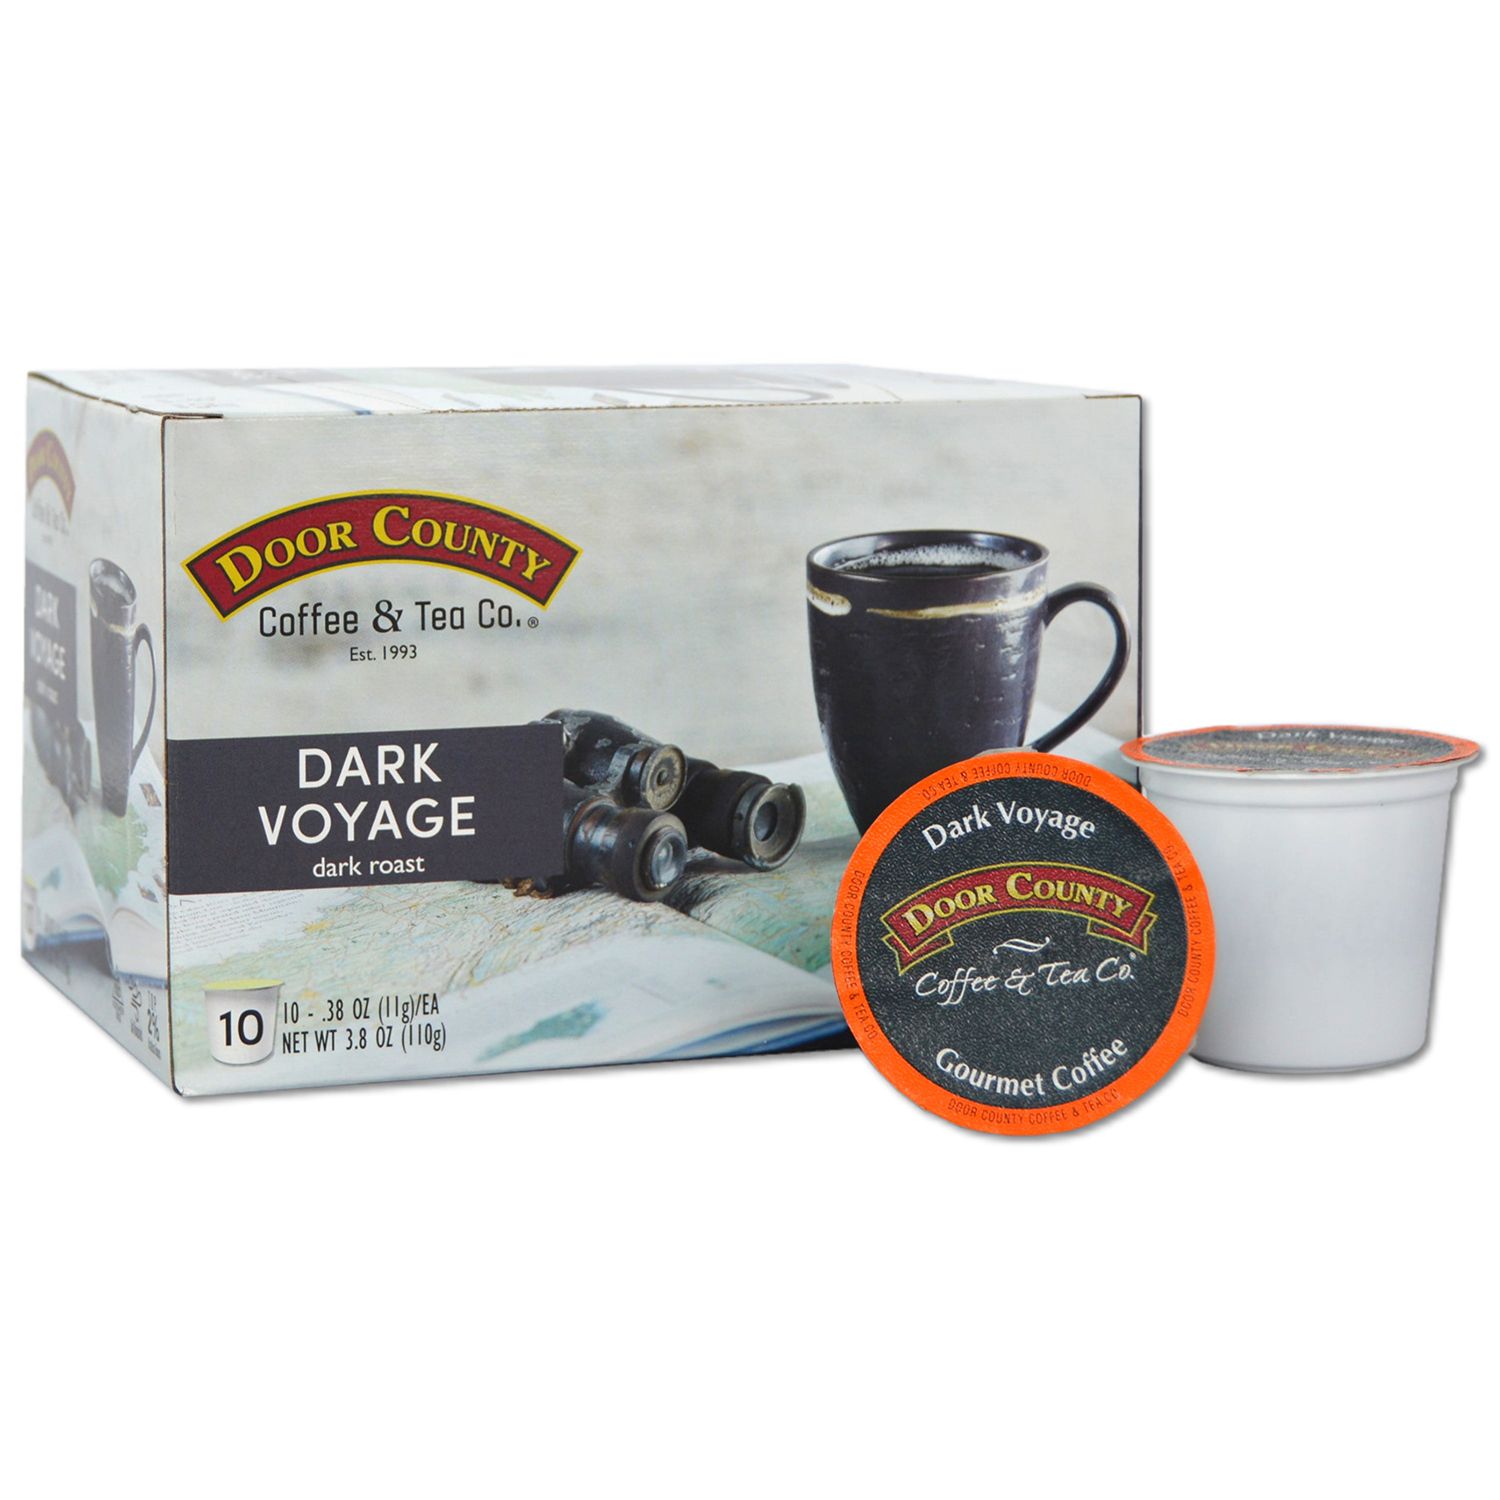 Image for Door County Coffee & Tea Co. Dark Voyage Sumatra & Guatemala Specialty Single-Serve Coffee Pods, Dark Roast, 10 Count at Kohl's.